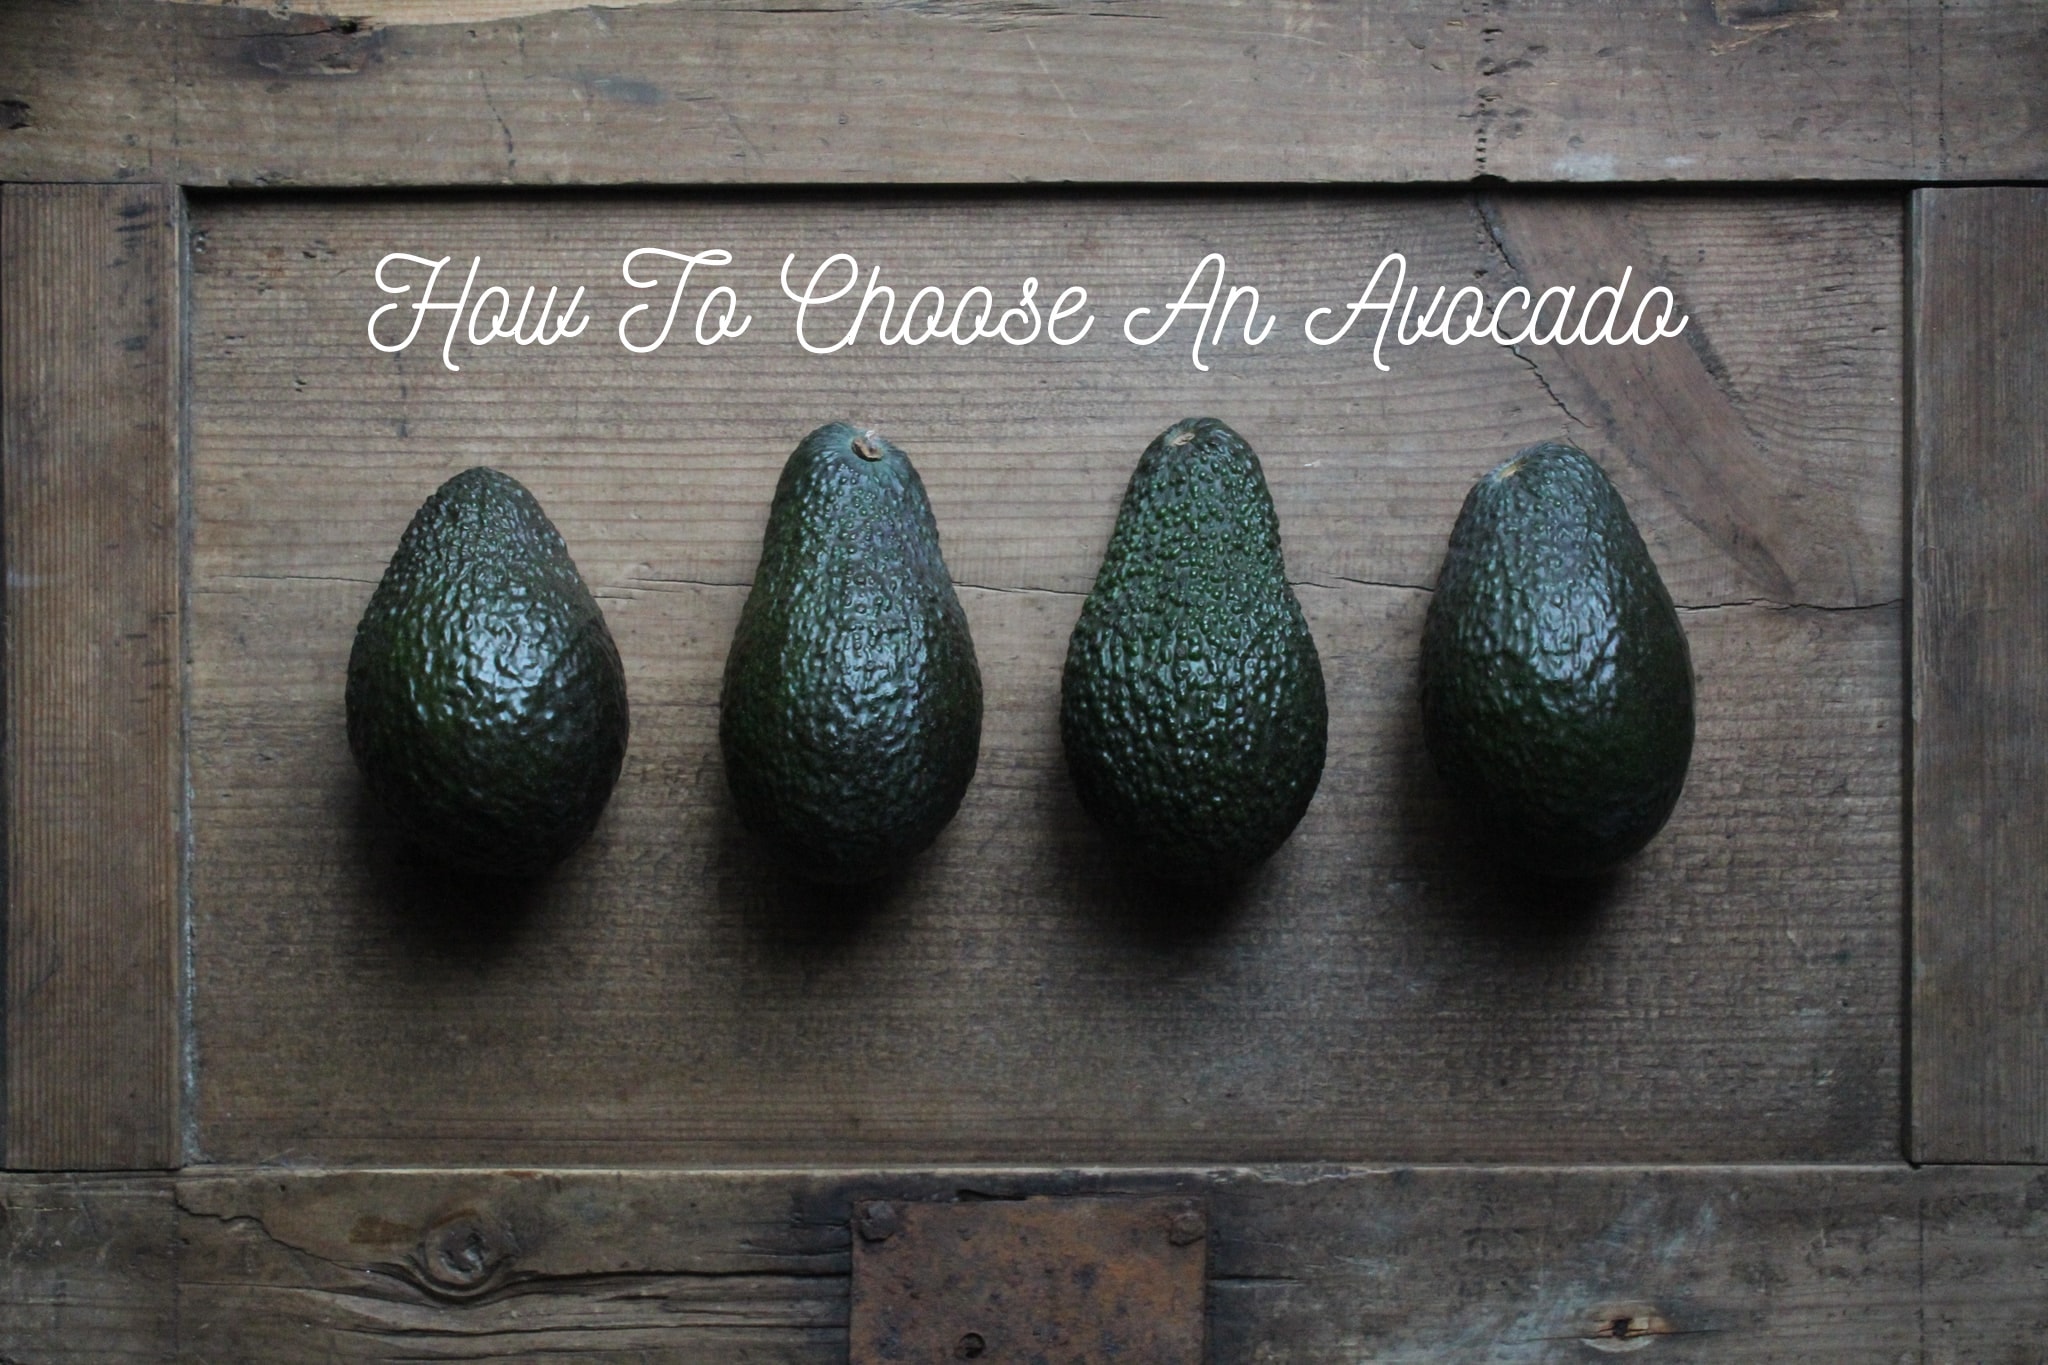 How to choose an Avocado